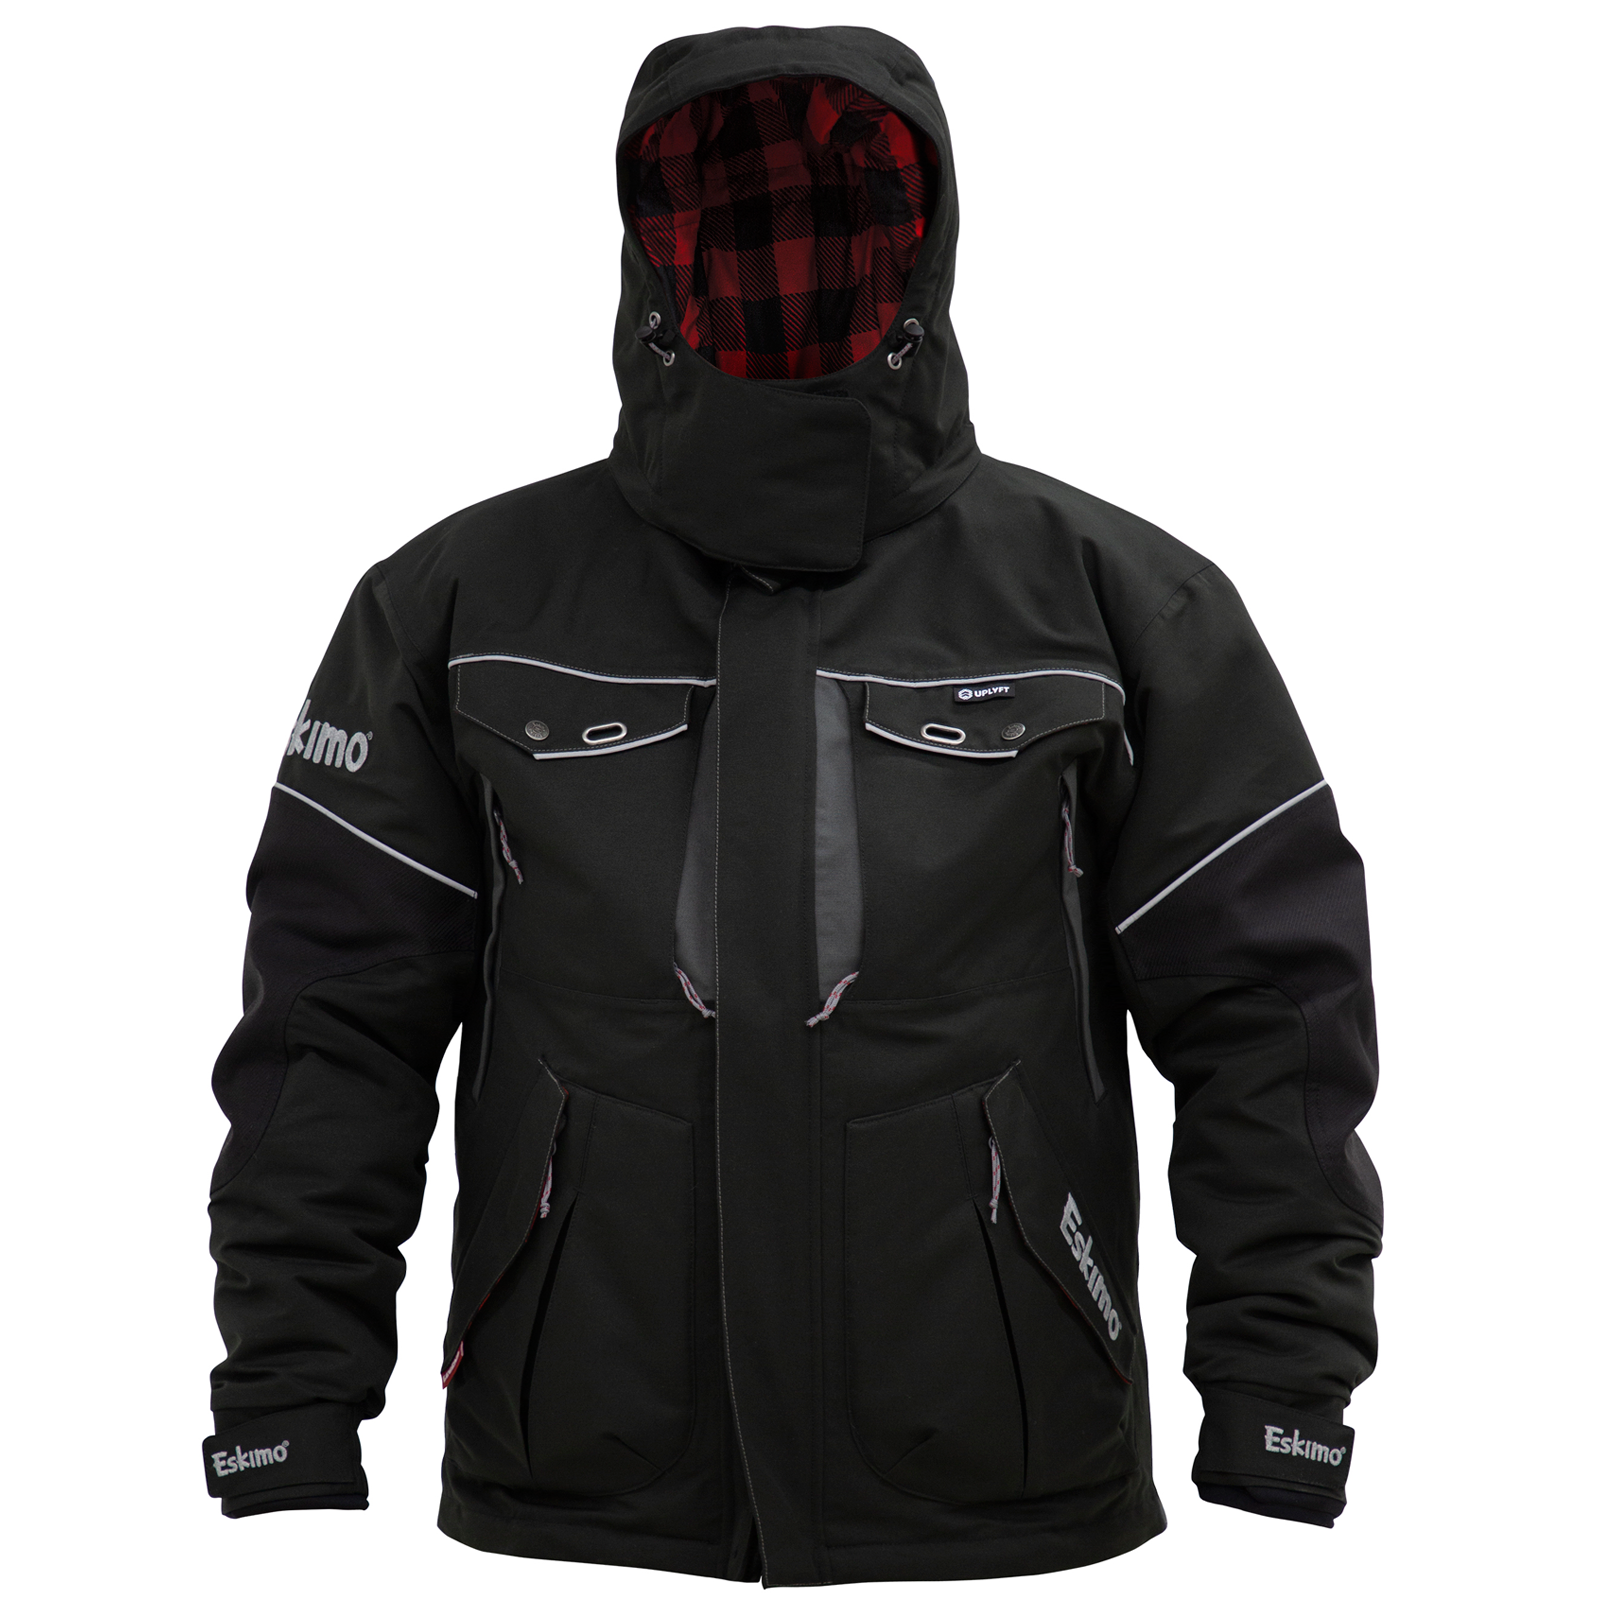 Eskimo Men's Legend Jacket, Medium, Black Ice